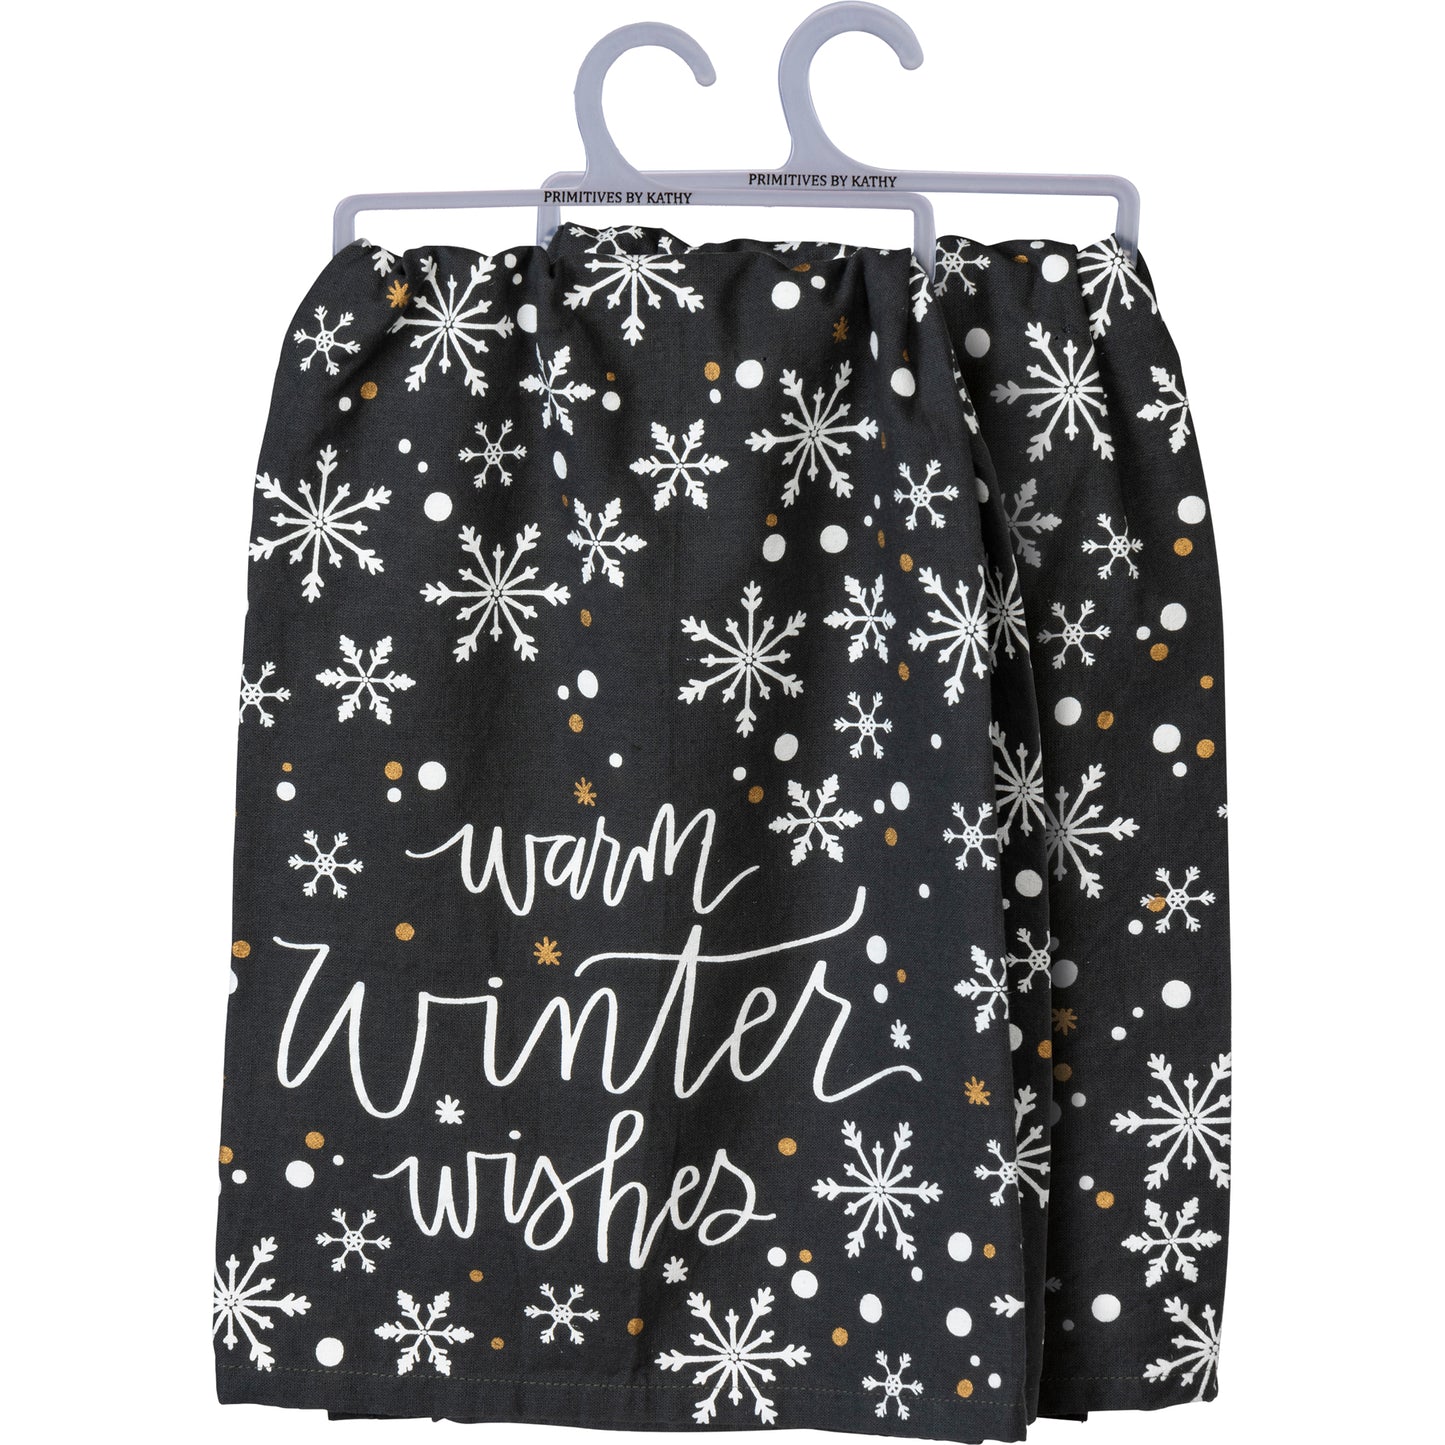 Warm Winter Wishes Snowflake Kitchen Towel